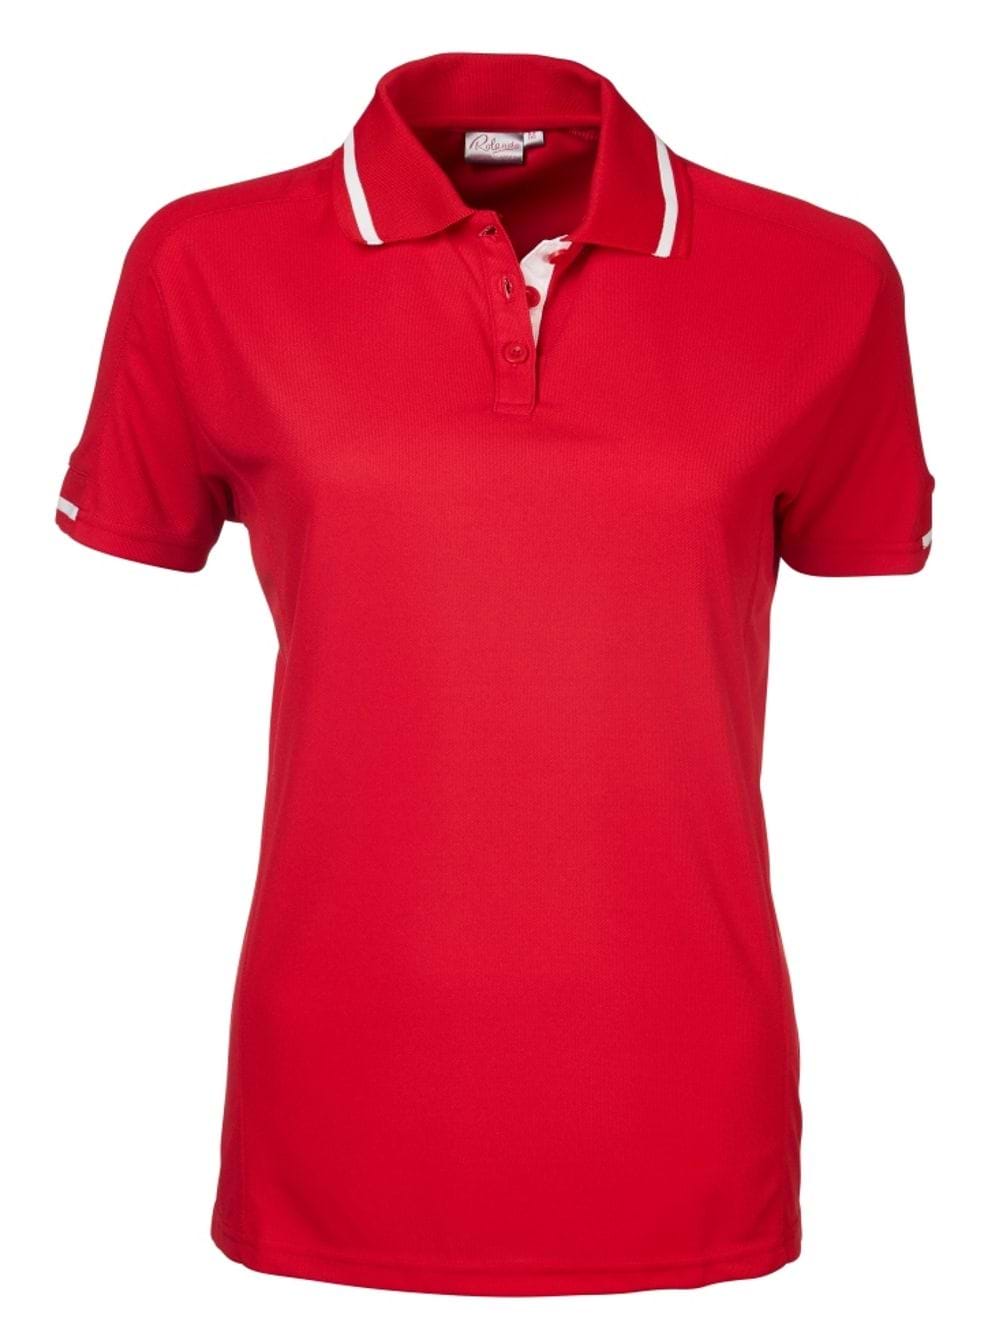 Ladies Qd1 Quick Dry Golfer - RED / White Trim